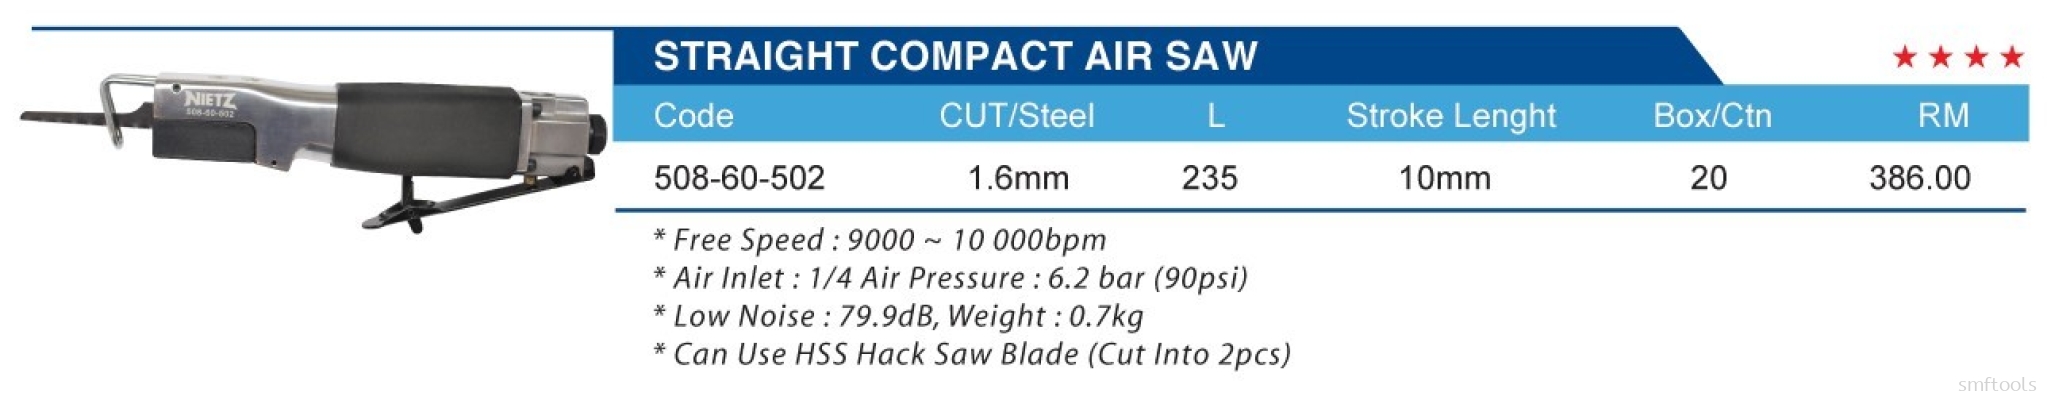 STRAIGHT COMPACT AIR SAW